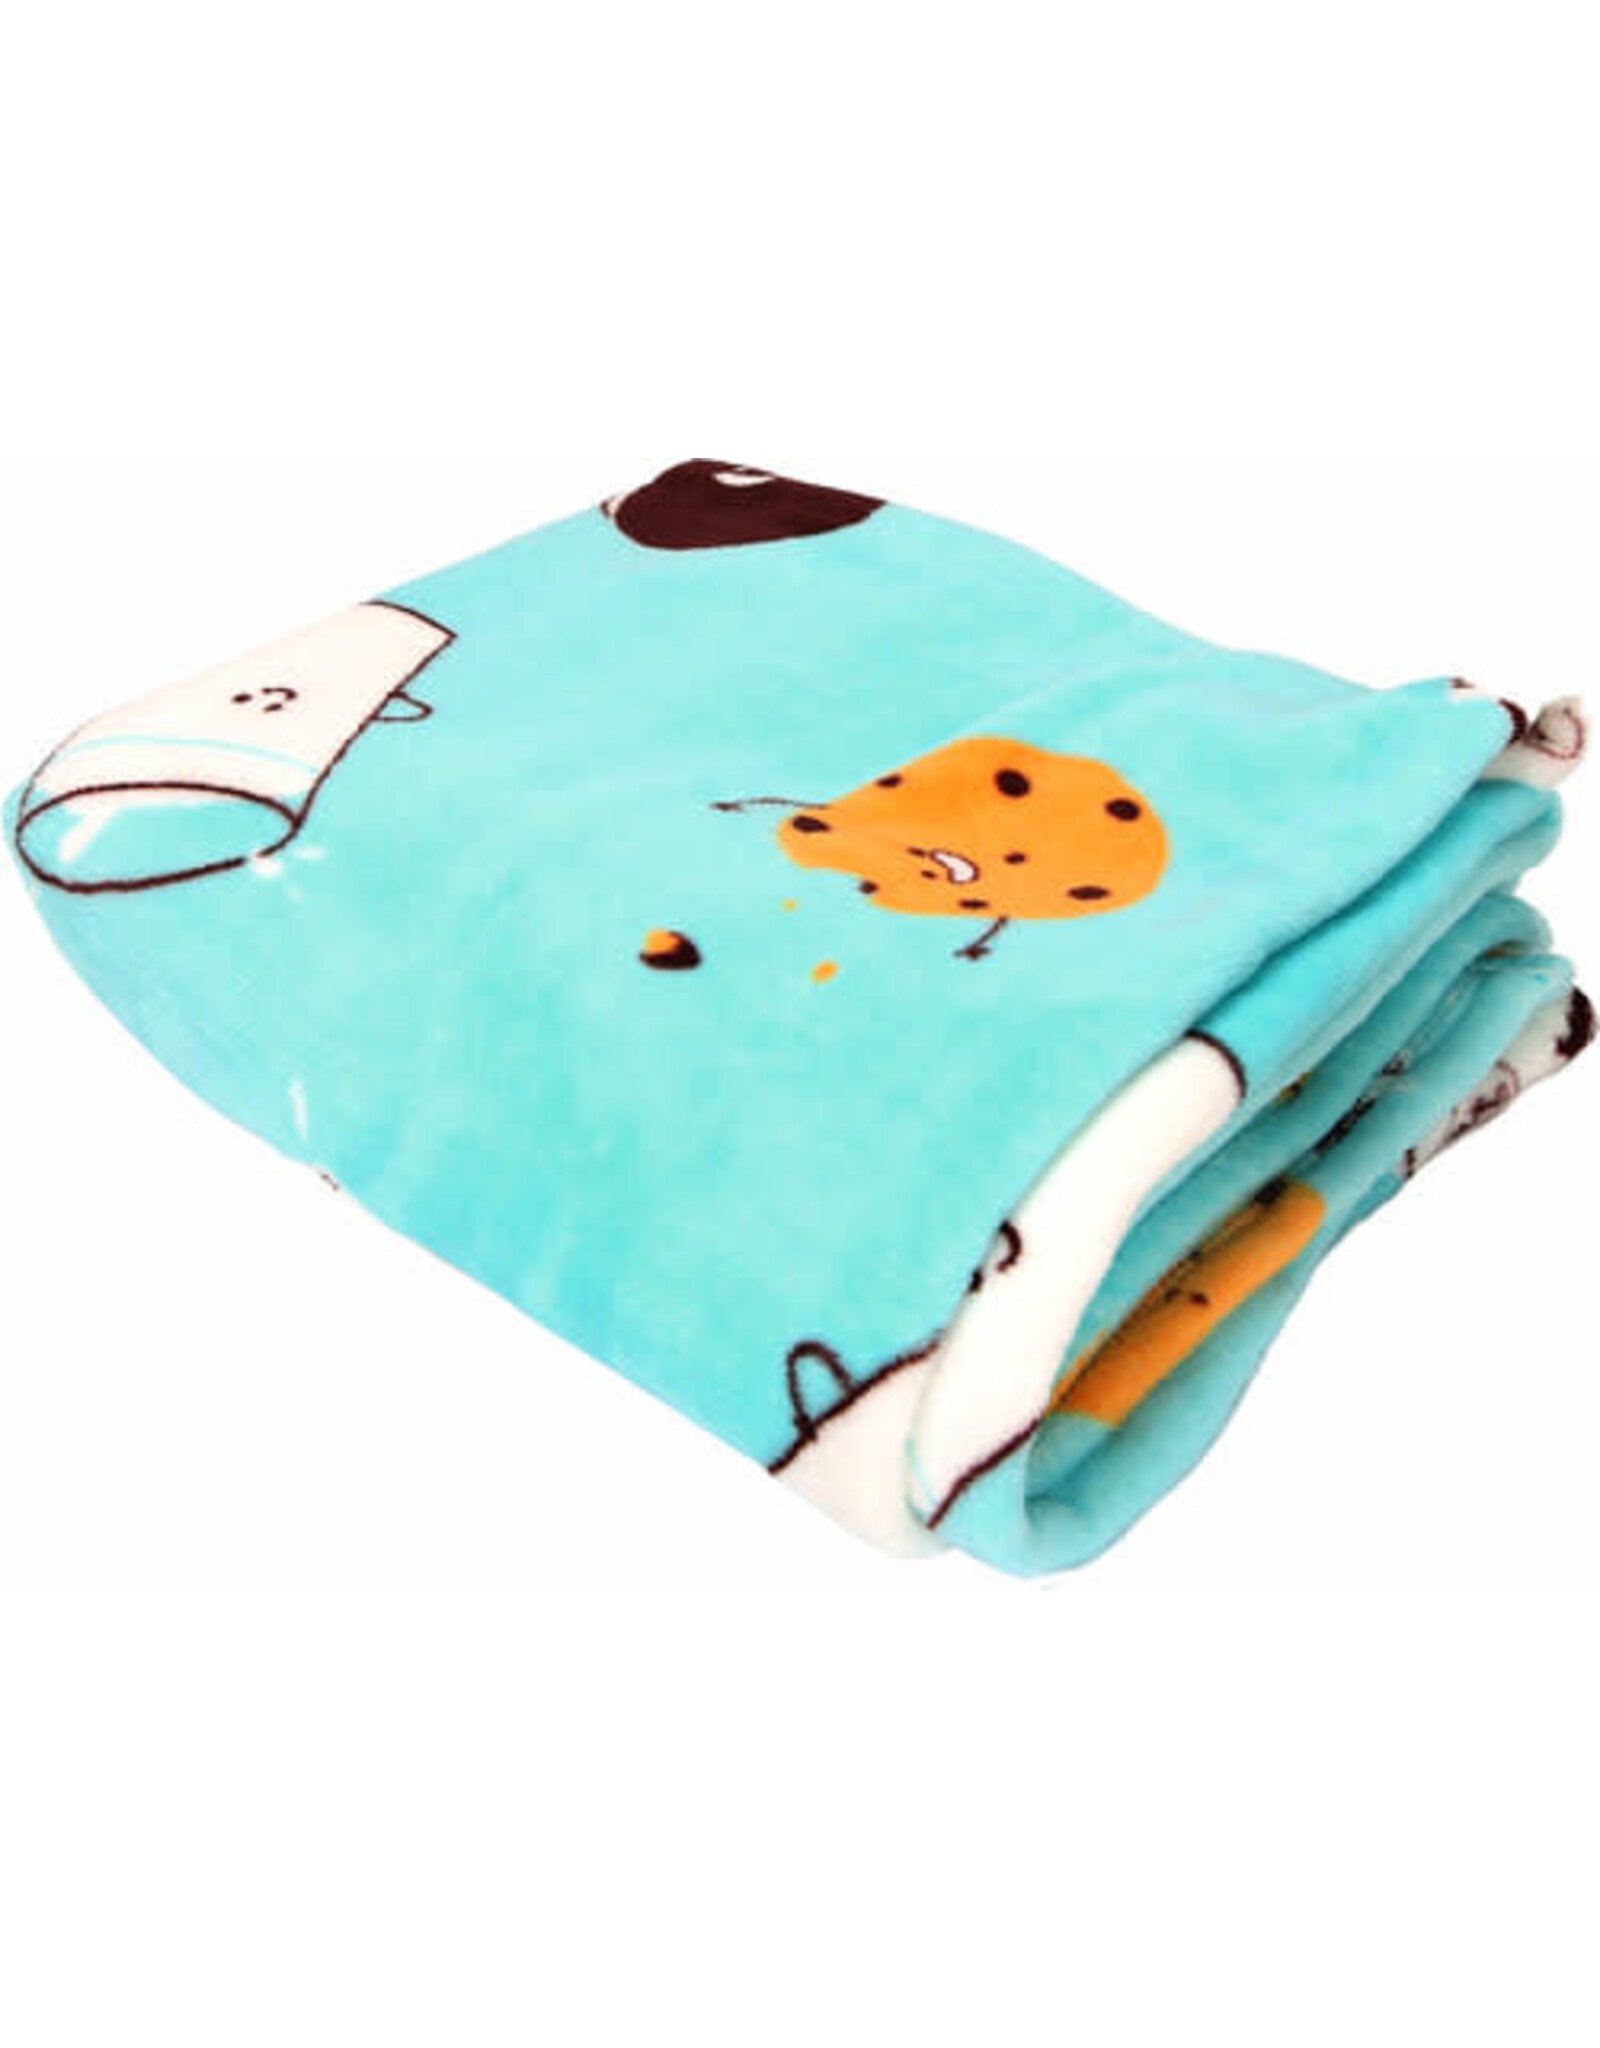 PGC Milk & Cookies Plush Blanket with Bag